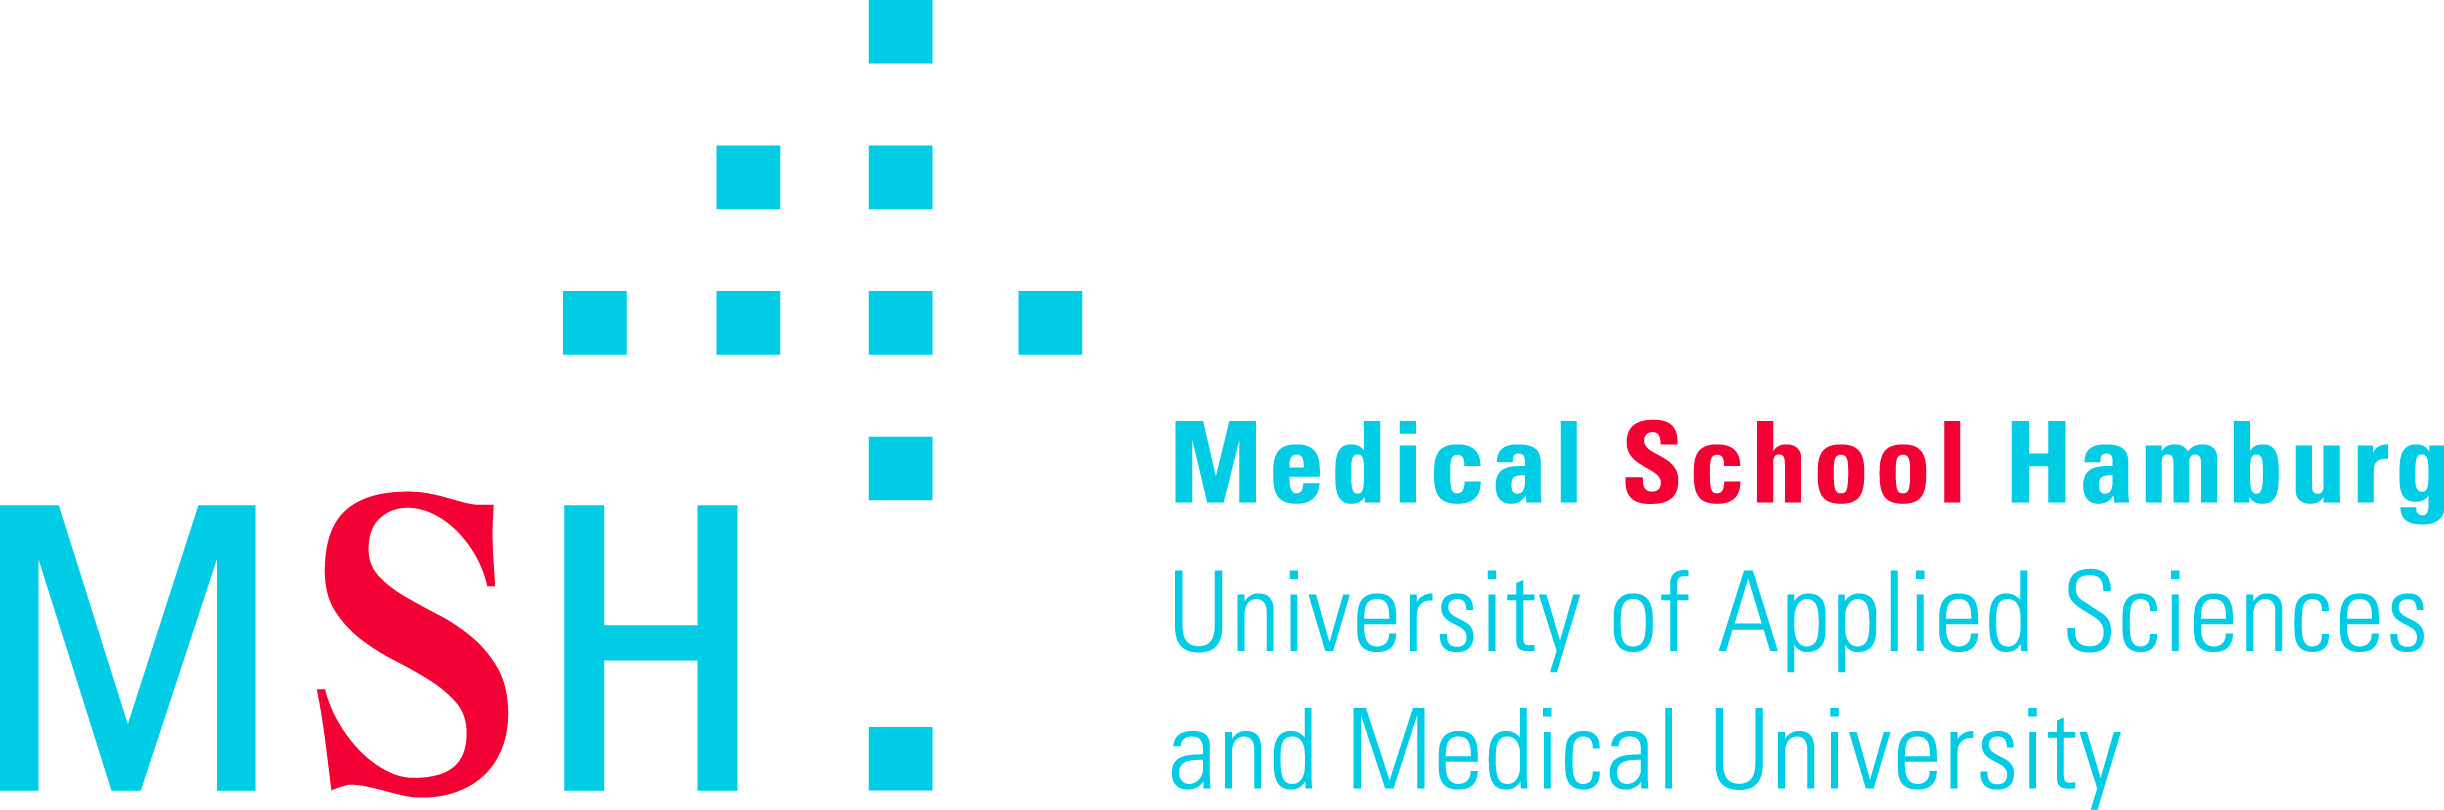 Logo der MSH Medical School Hamburg